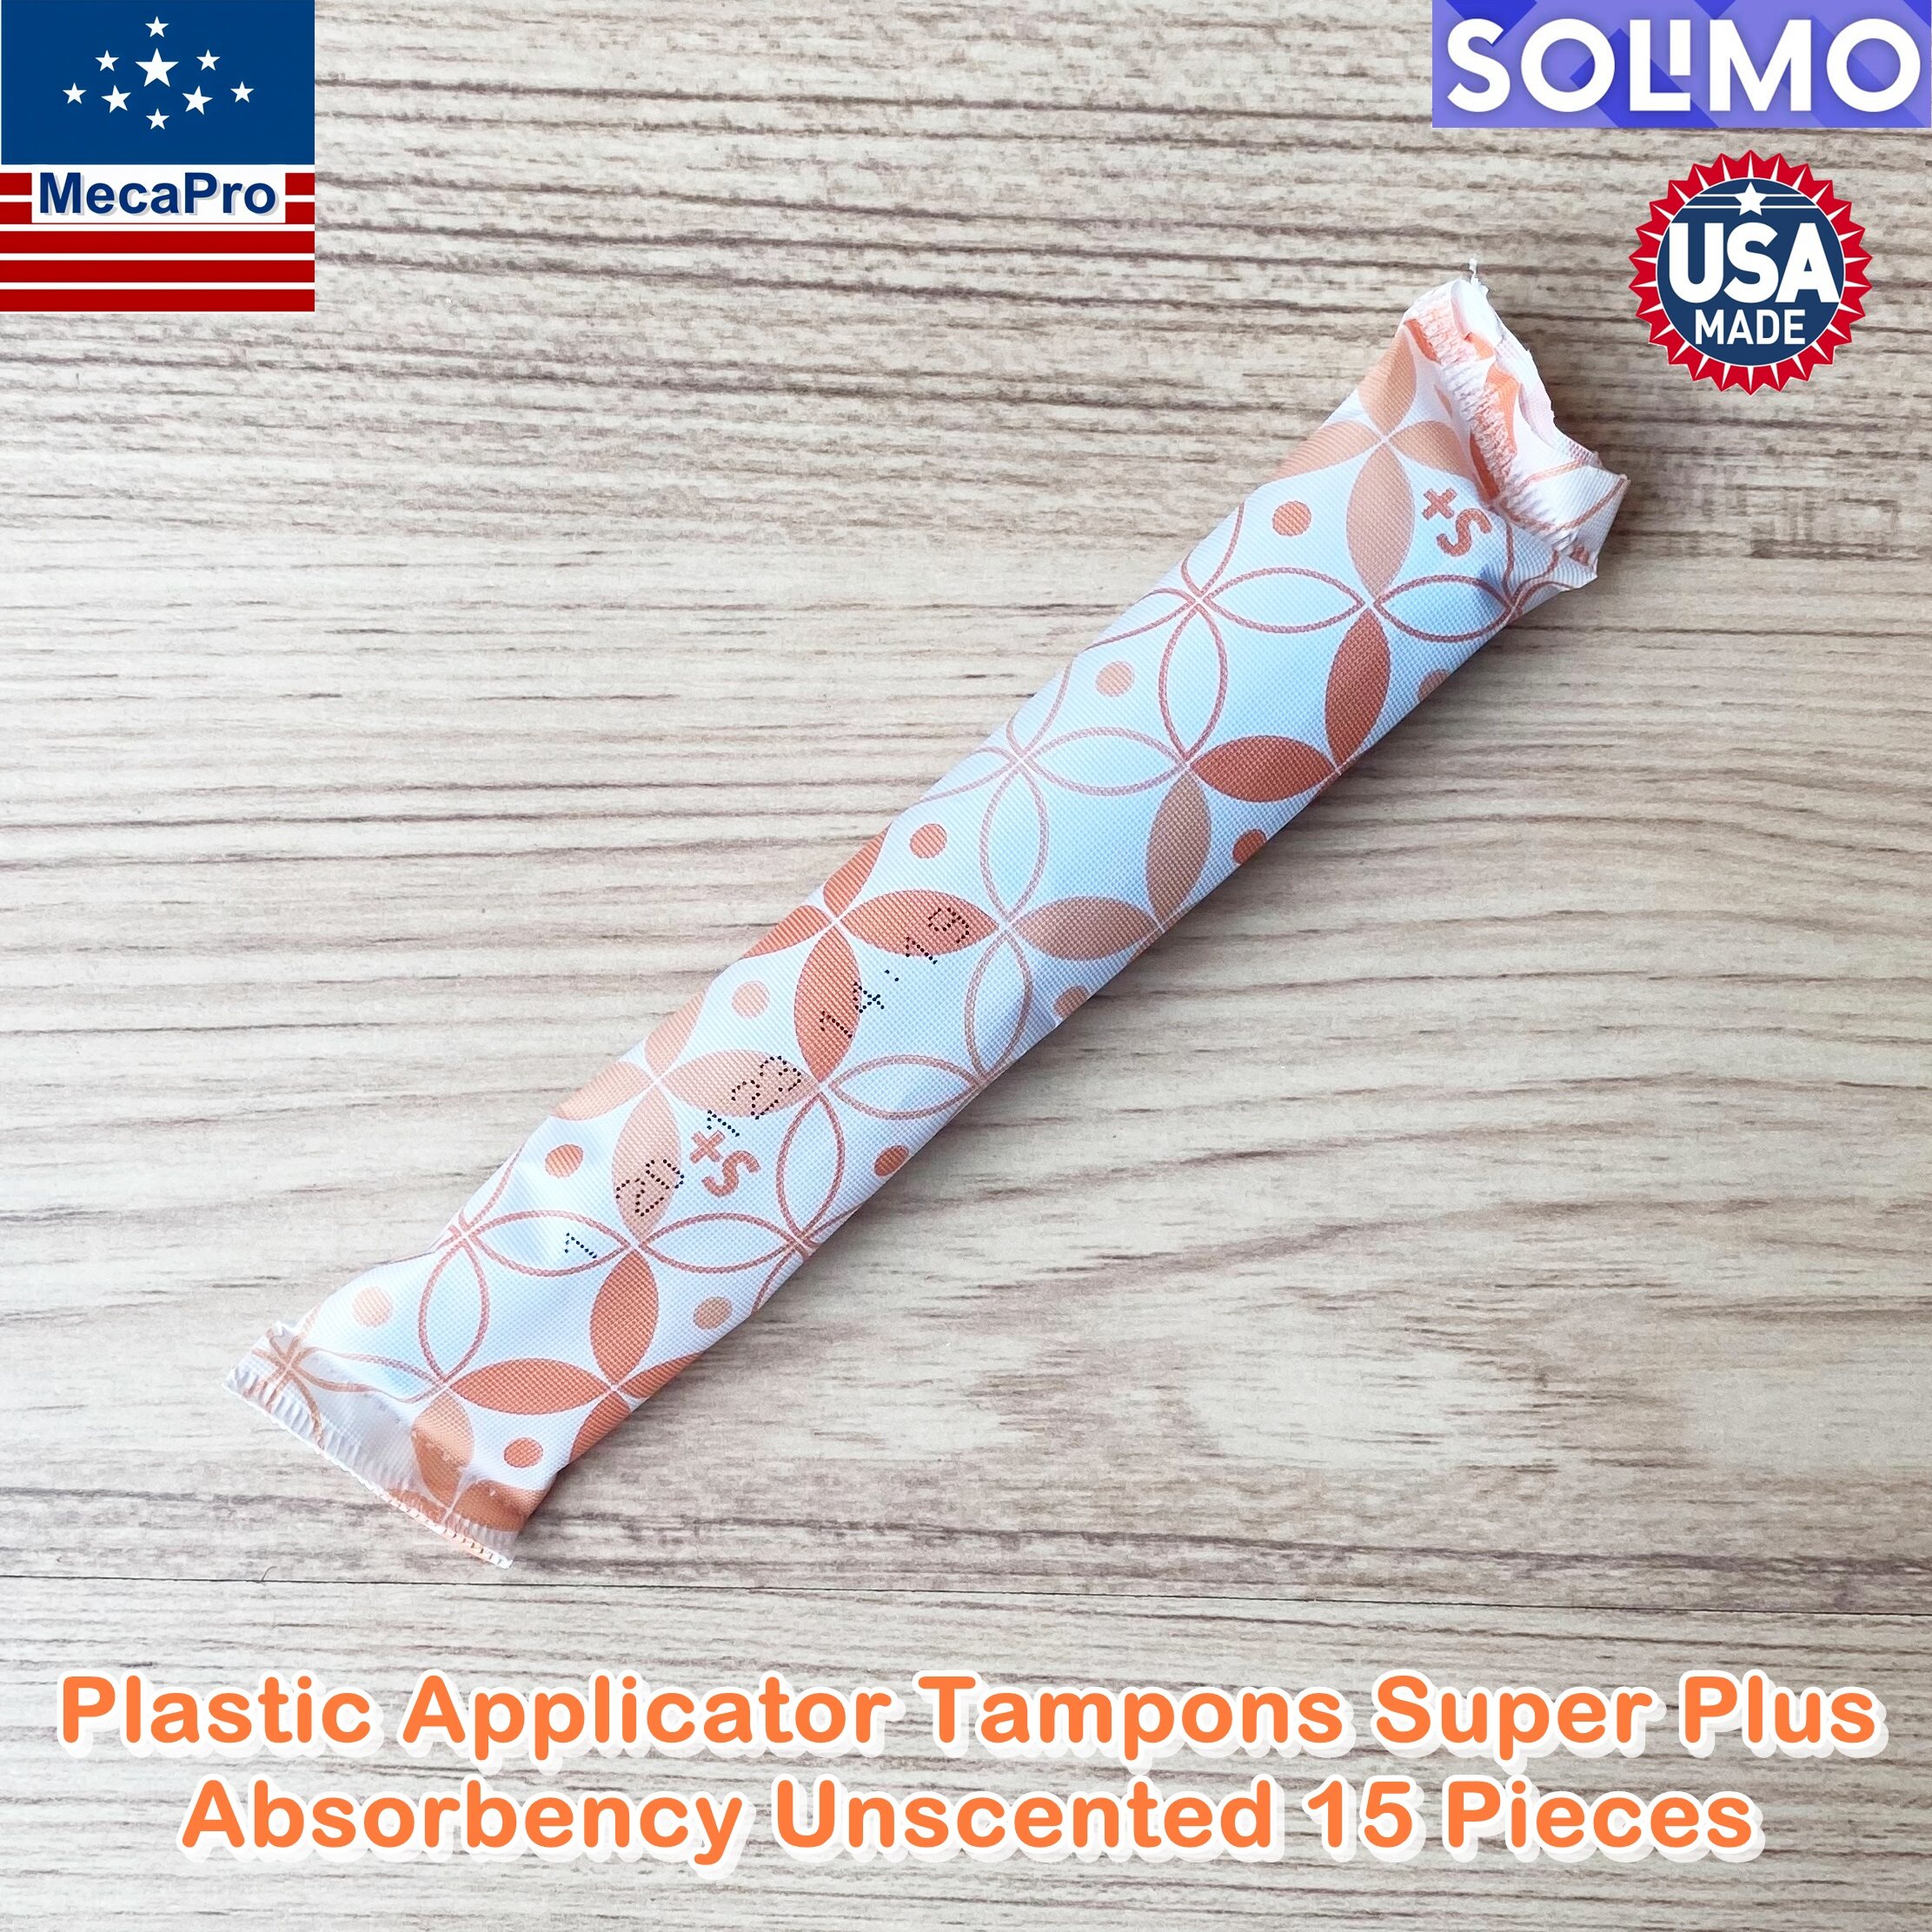 Solimo Plastic Applicator Tampons Super Plus Absorbency Unscented 15 Pieces ผ้าอนามัยแบบสอด โซลิโม 15 ชิ้น แบ่งขาย เหมาะกับวันมามากกว่าปกติ